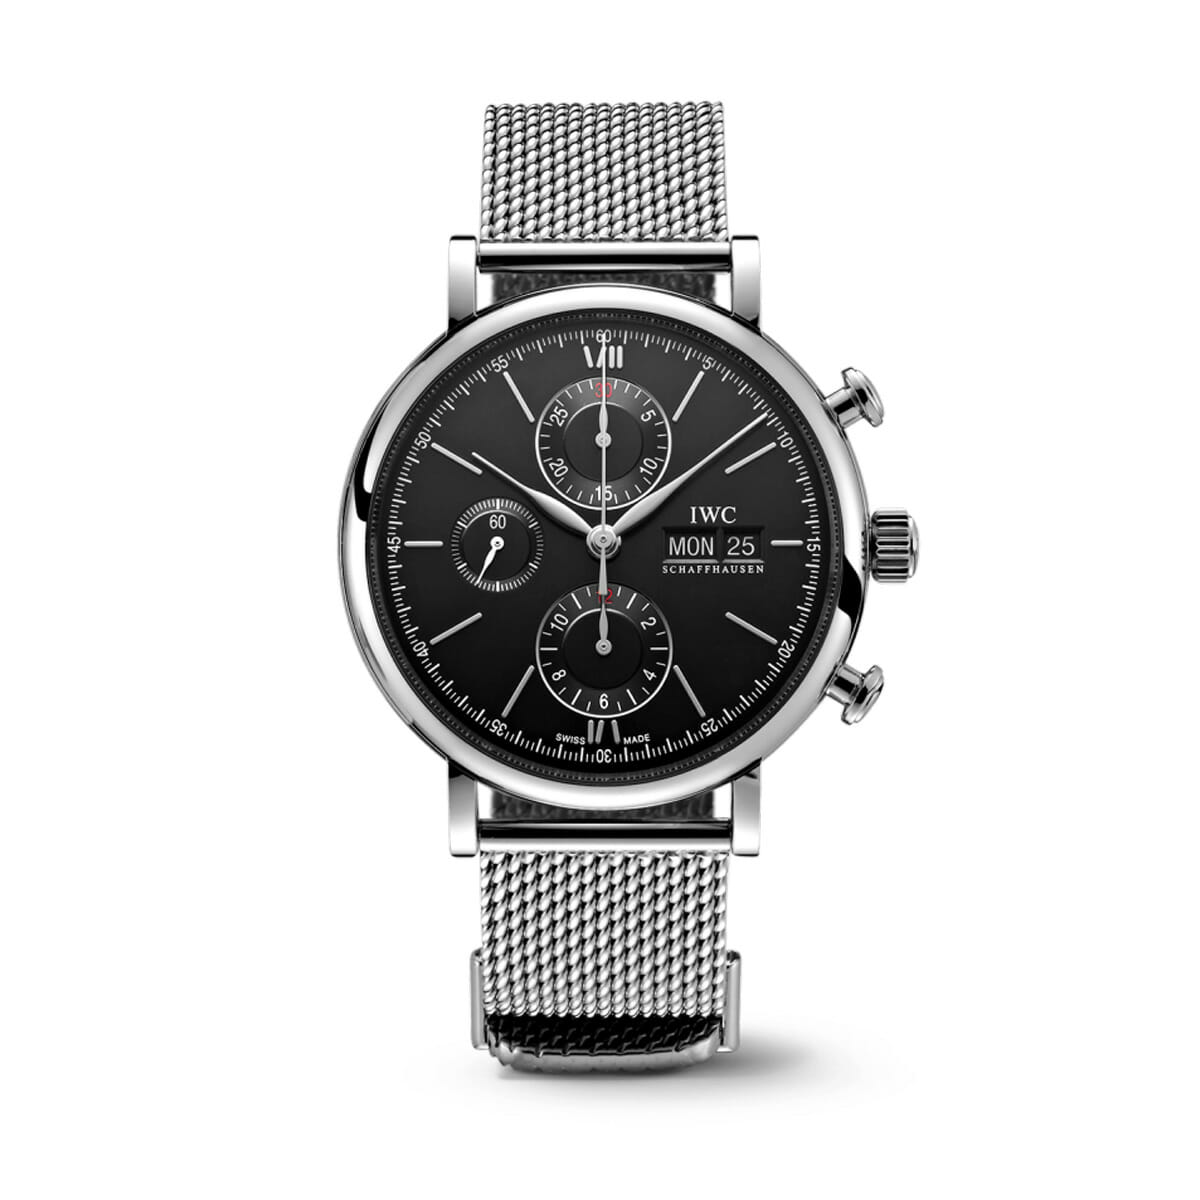 Portofino Chronograph 42mm Watch